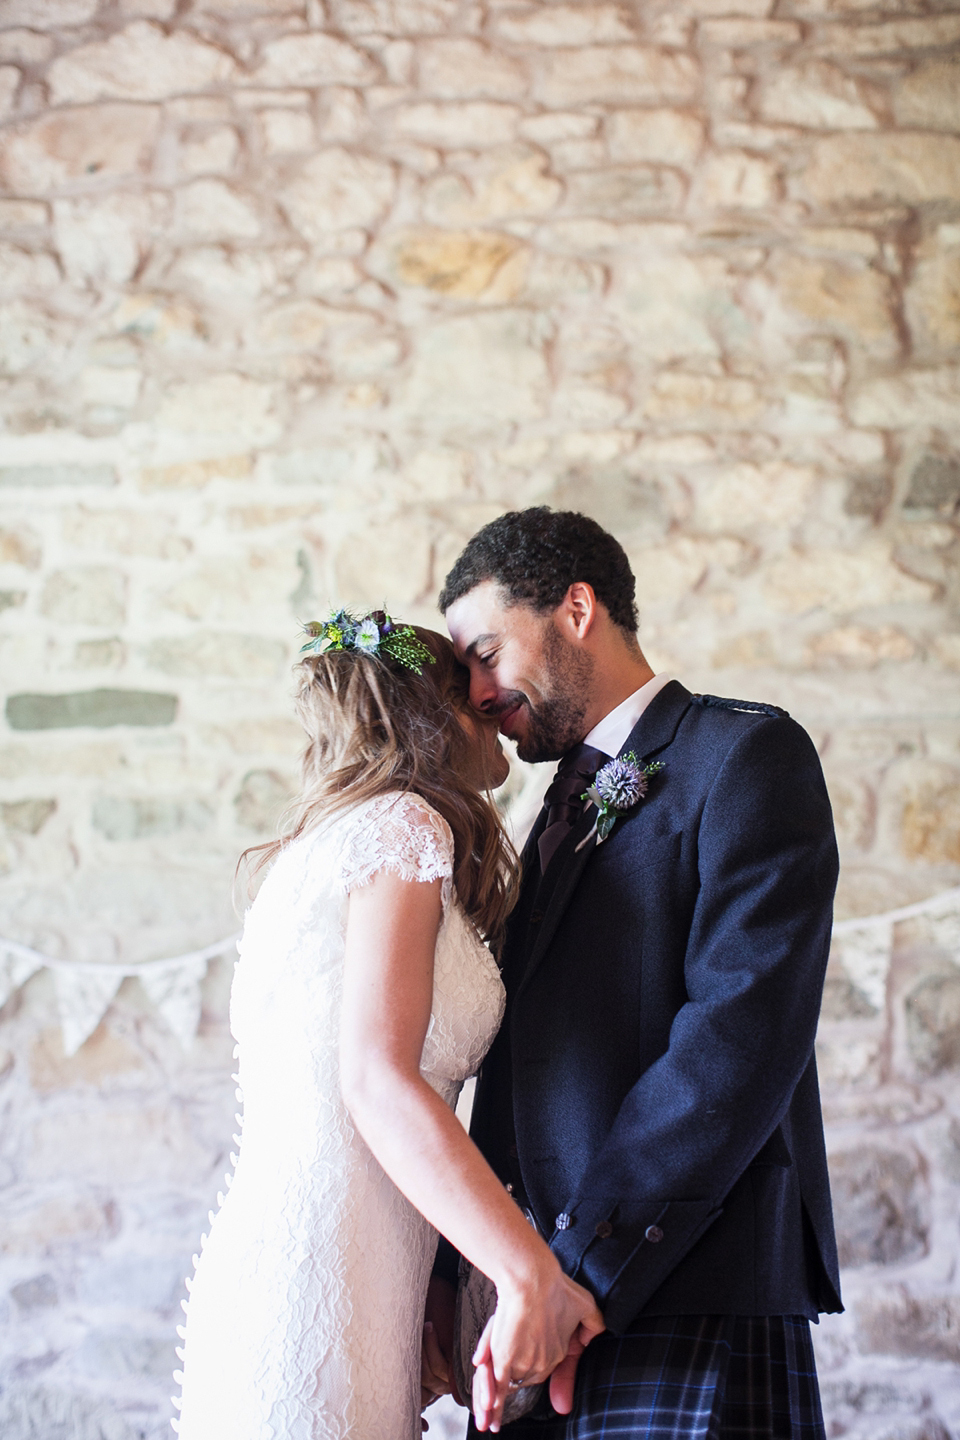 Laidback rustic wedding // Beaumonde wedding dress // Photography by Lauren McGlyn